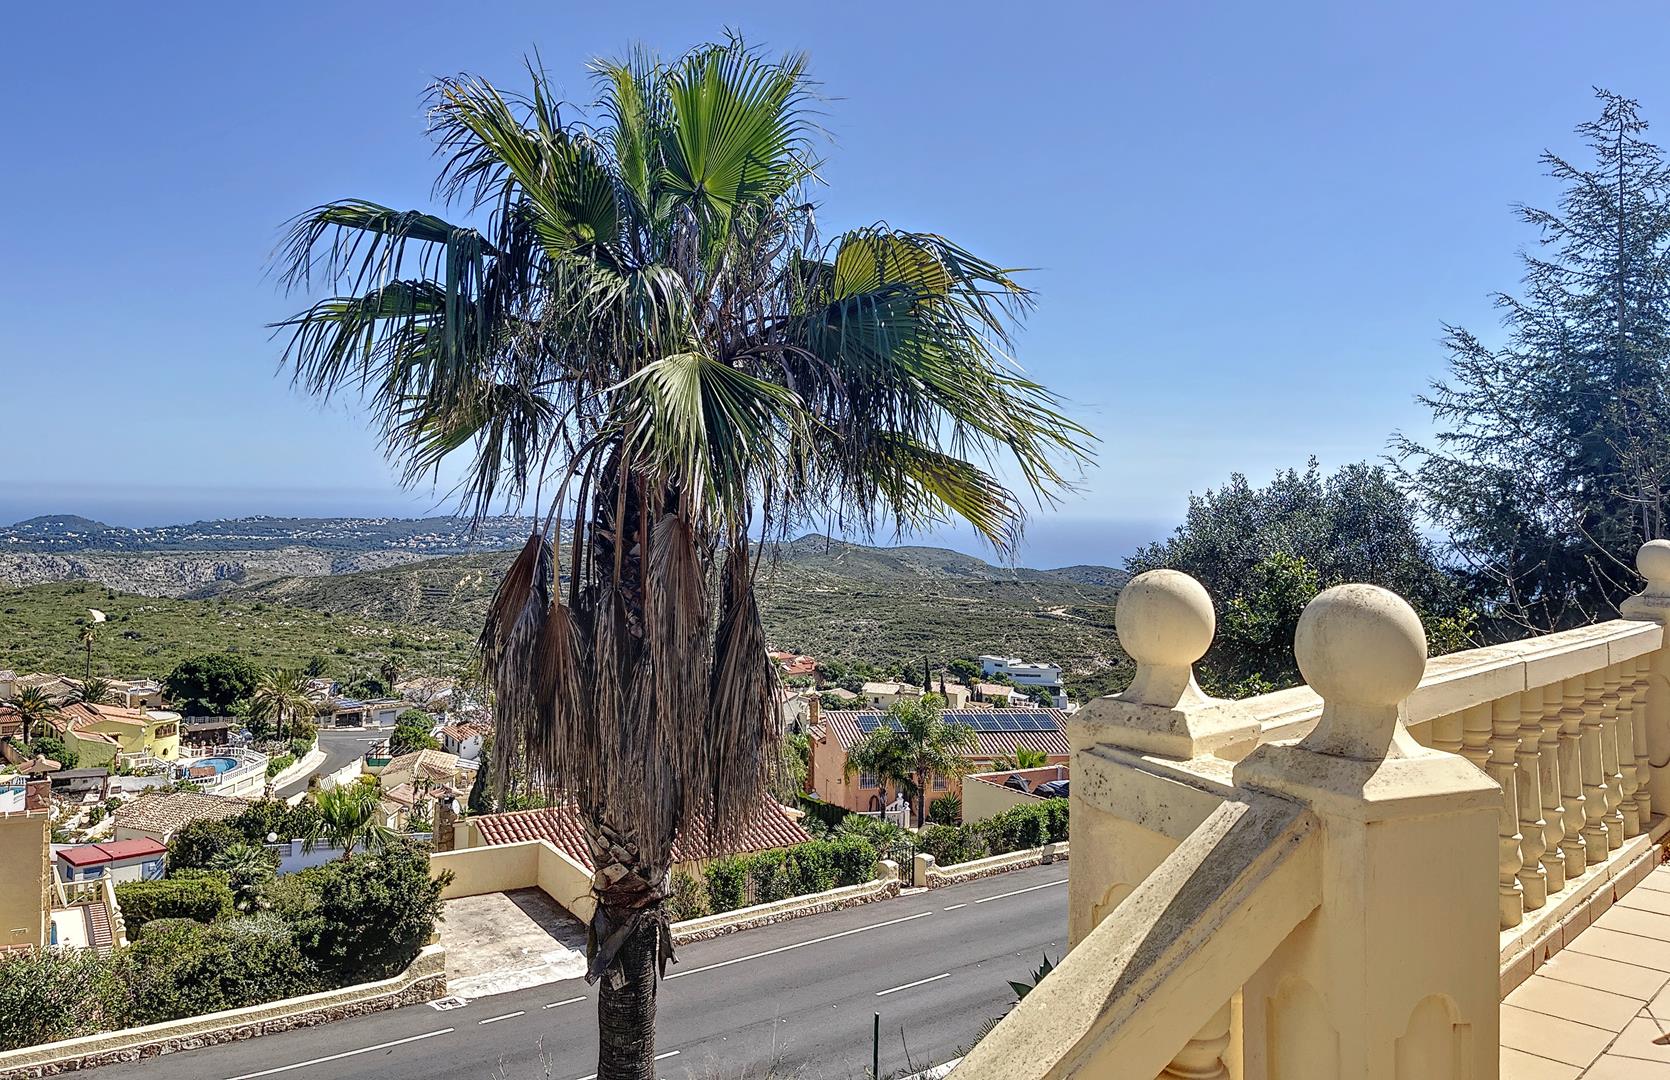 Villa with panoramic views